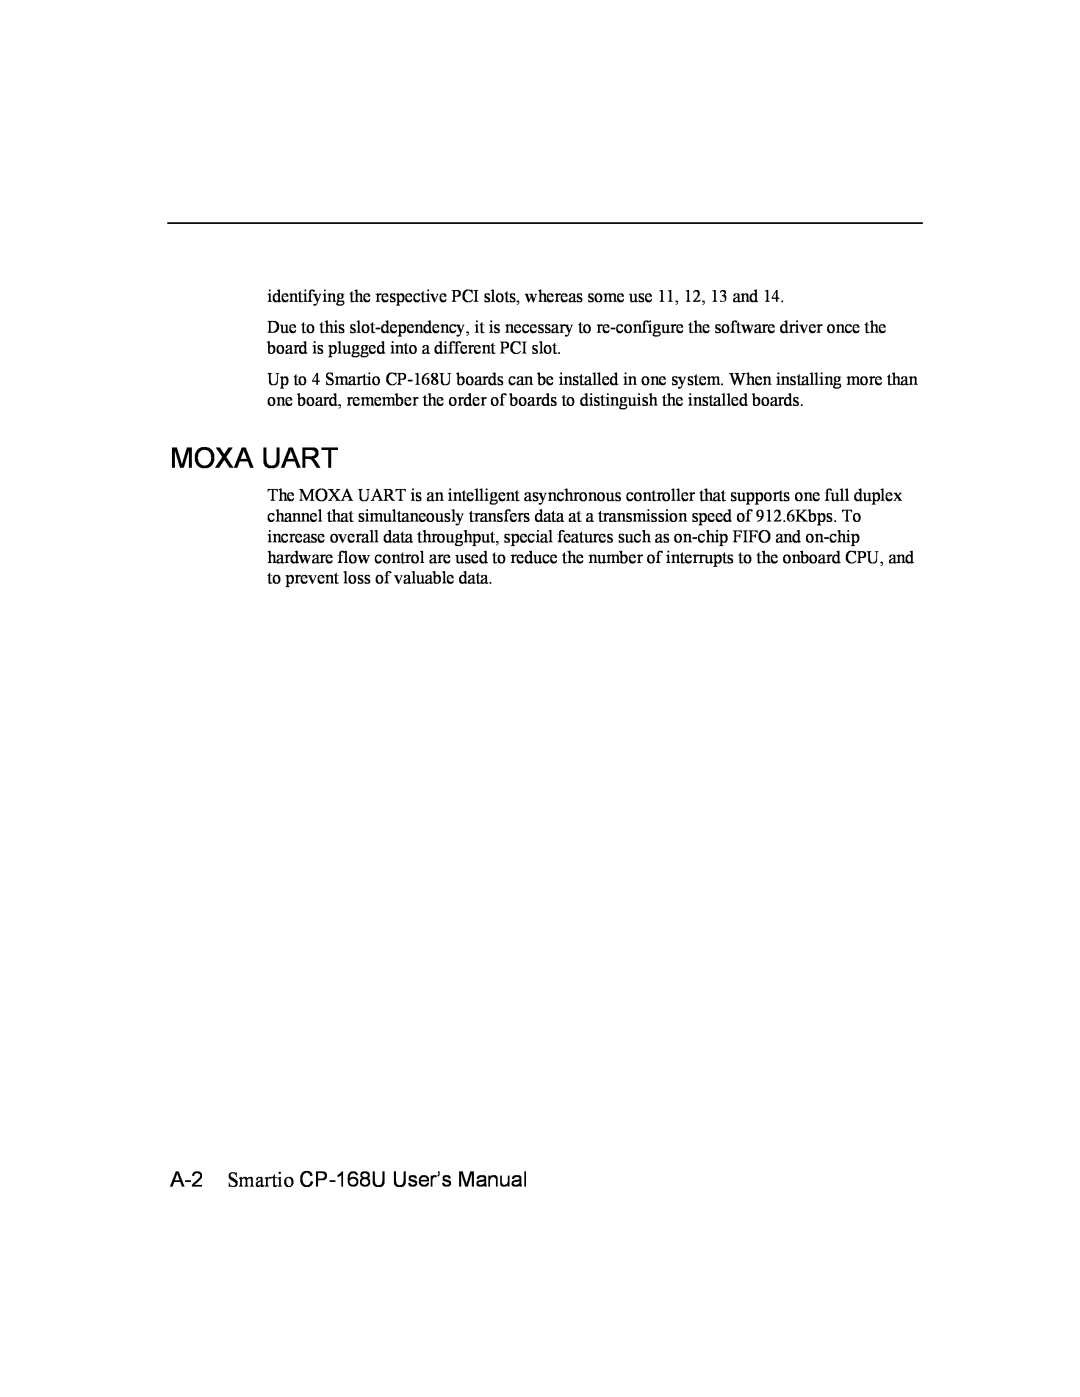 Moxa Technologies user manual Moxa Uart, A-2 Smartio CP-168U User’s Manual 